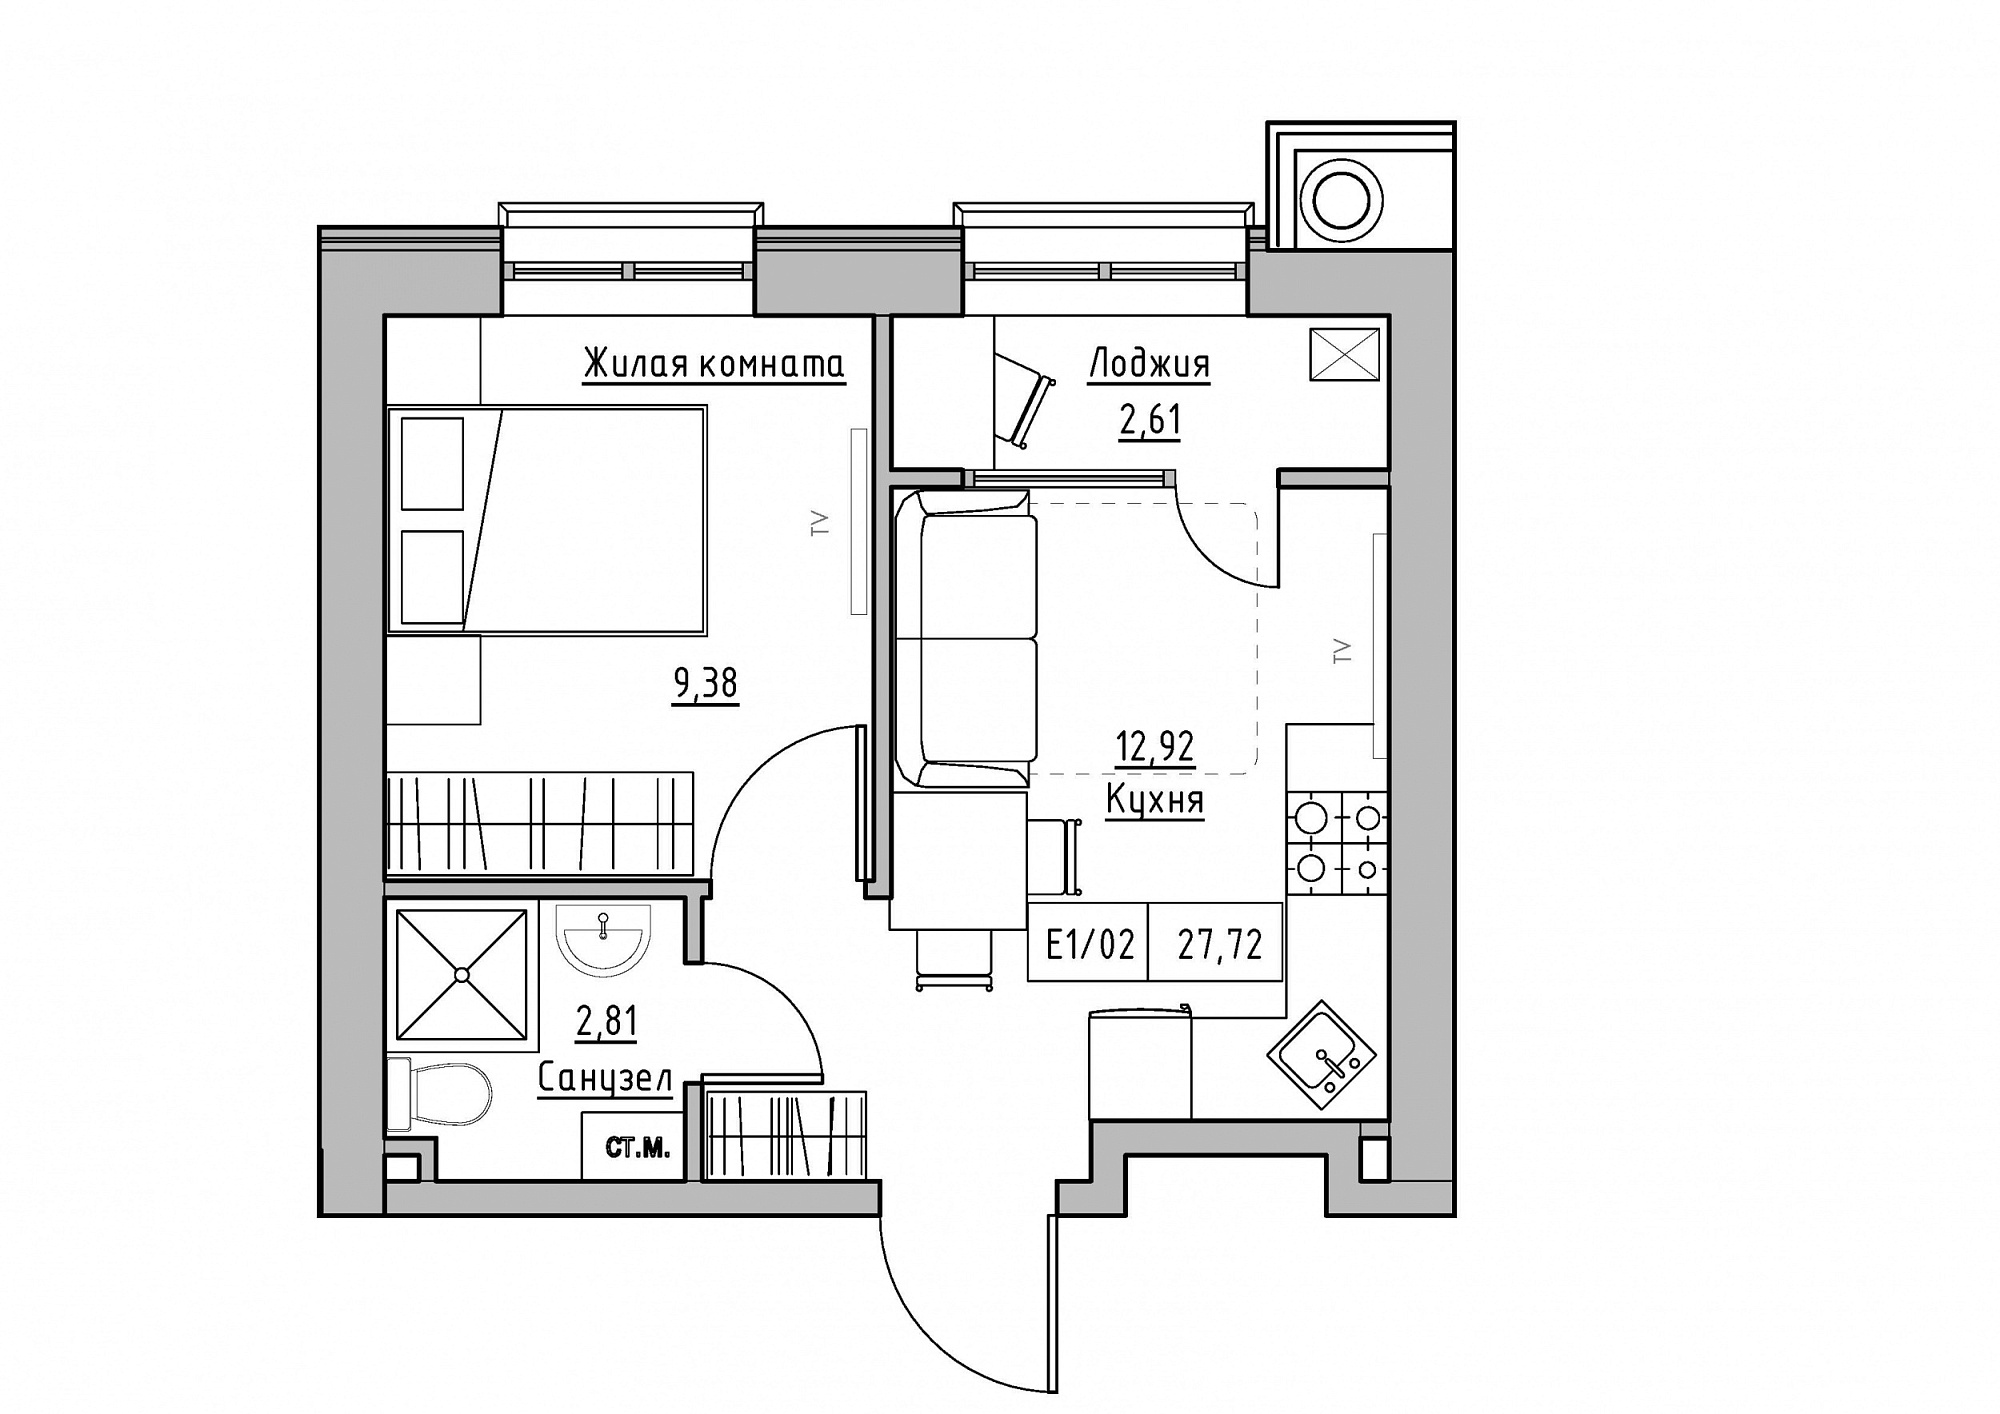 Planning 1-rm flats area 27.72m2, KS-012-03/0001.